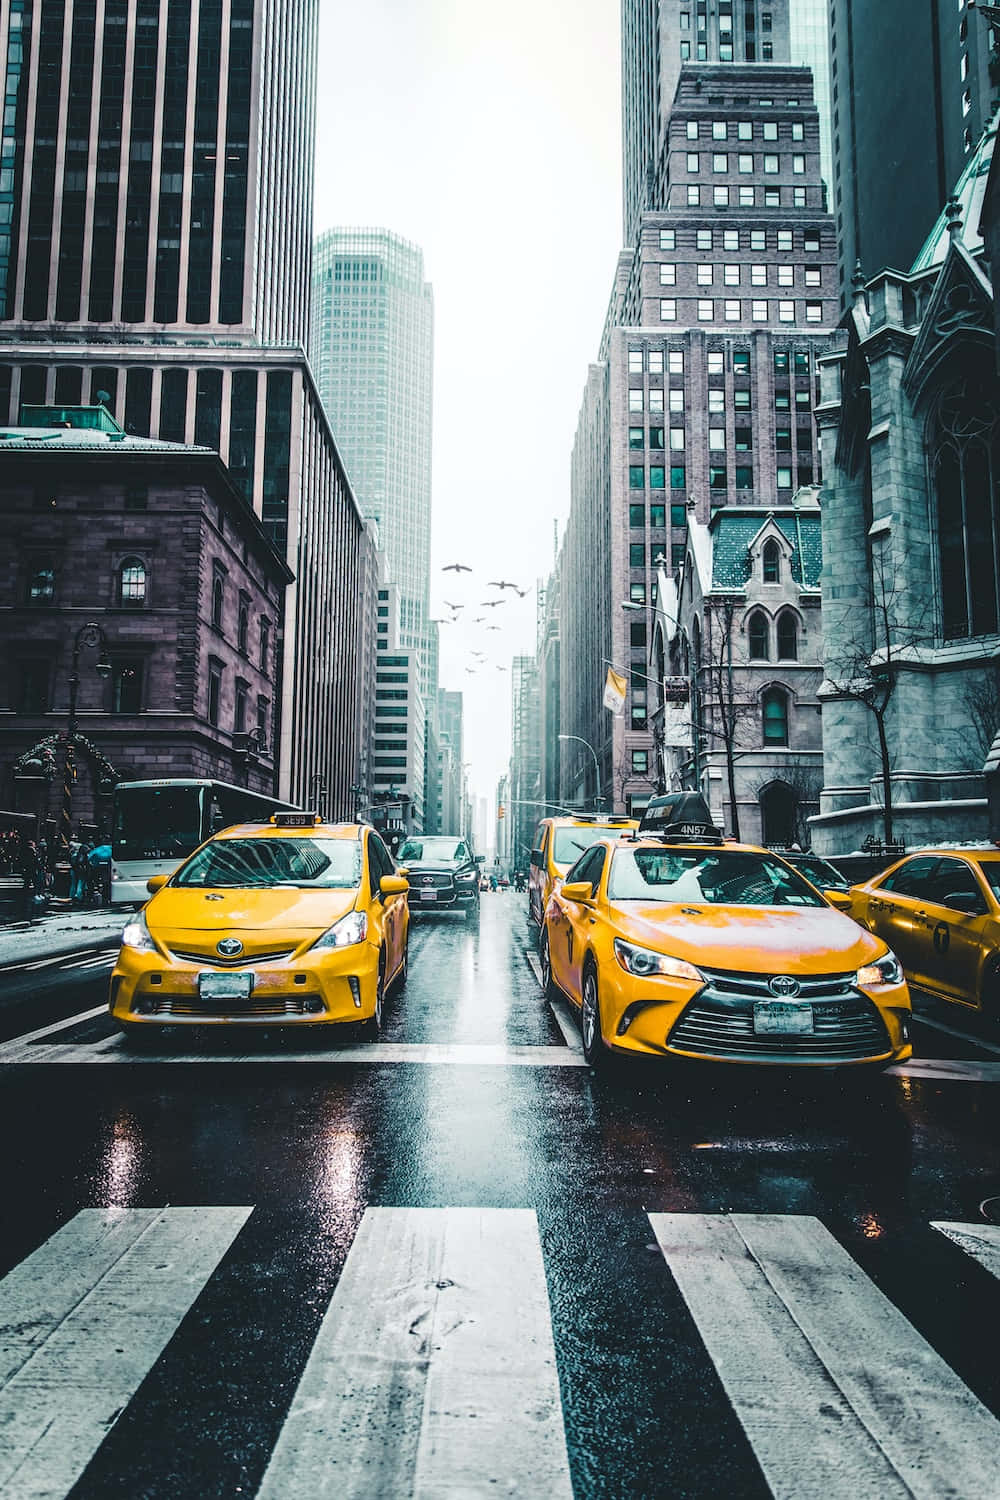 Yellow Cab cruising through the city streets Wallpaper